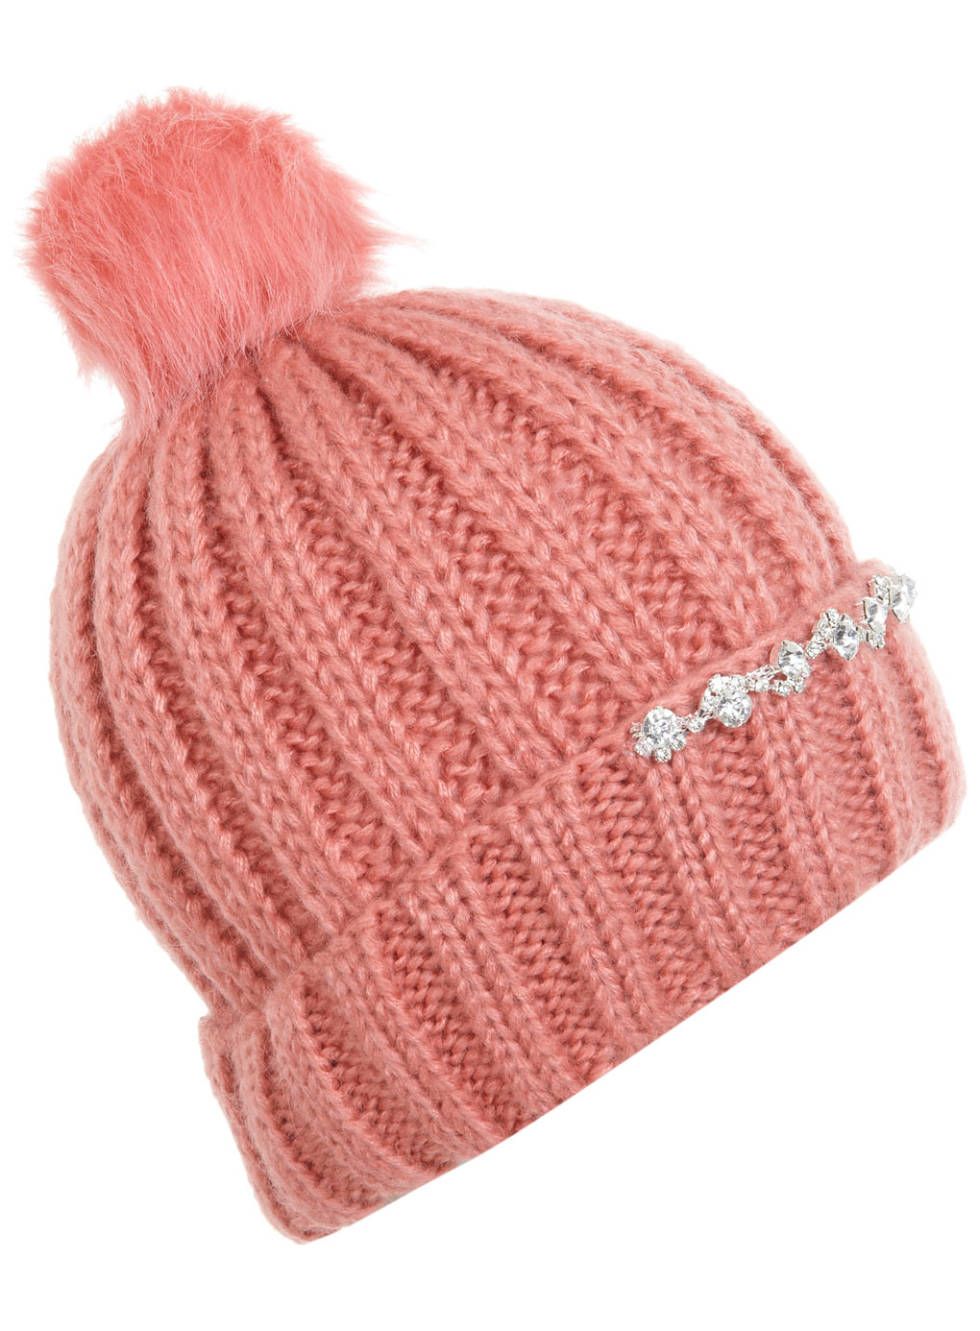 <a href="http://www.missselfridge.com/en/msuk/product/accessories-299050/hats-scarves-gloves-2469016/hats-2108077/pink-embellished-beanie-hat-3284337?refinements=category~%5b1246051%7c208110%5d&bi=1&ps=40" target="_blank">Pink Embellished Beanie Hat, £14